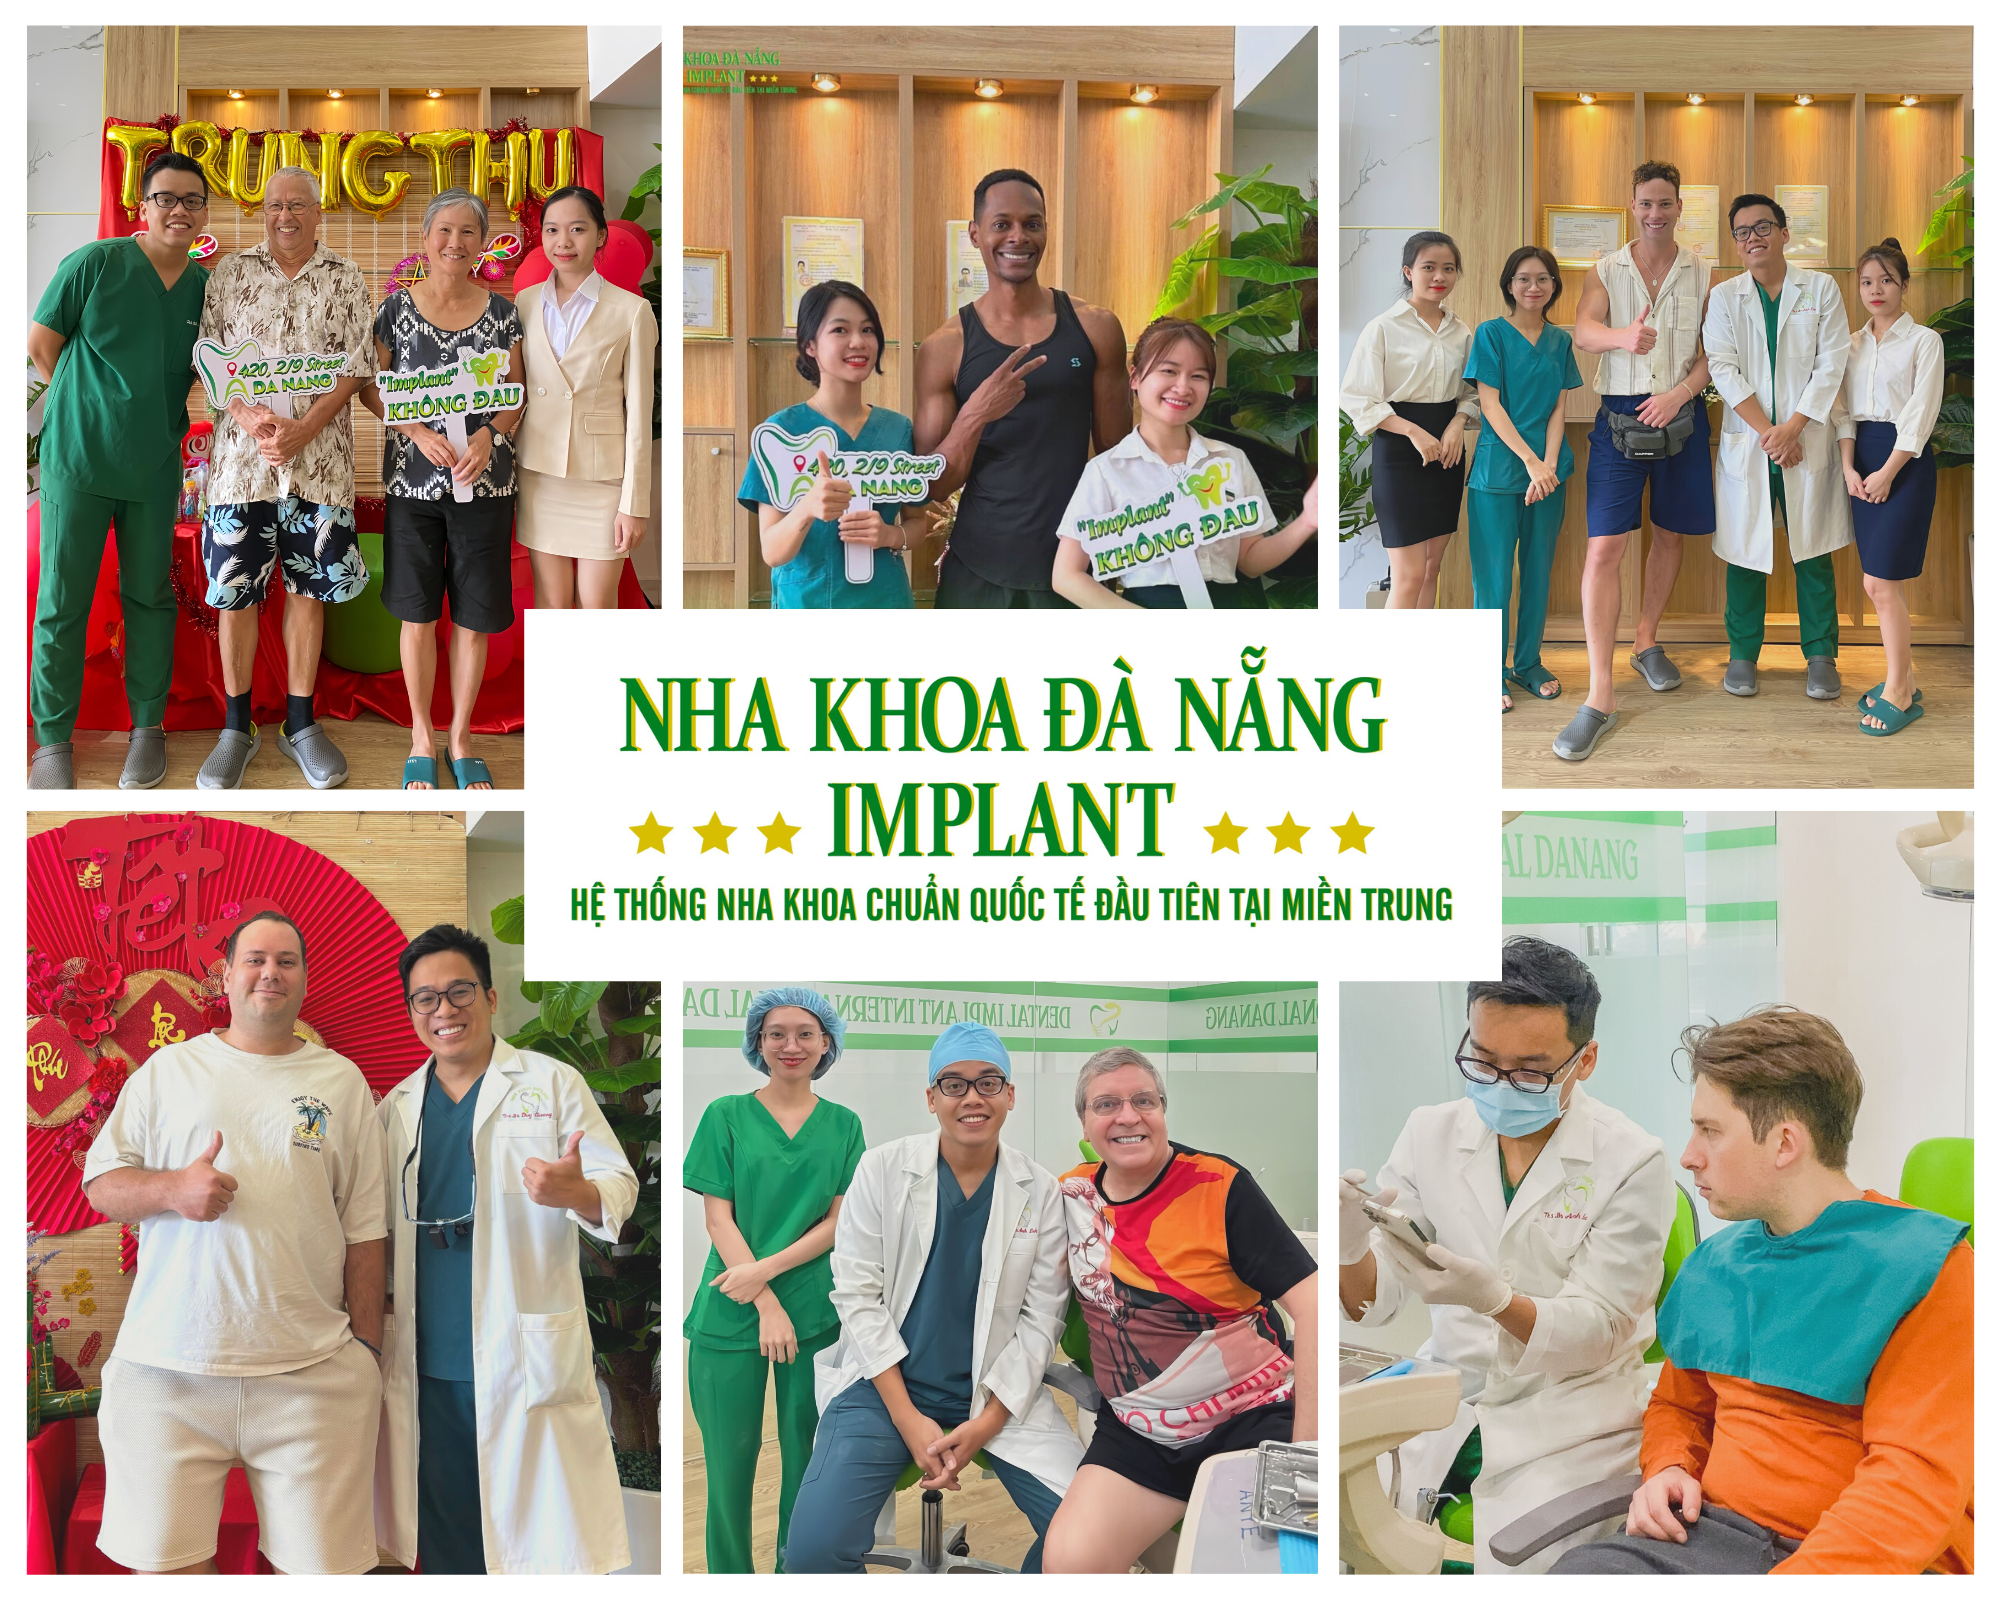 Foreign customers at Da Nang Implant Dental Clinic